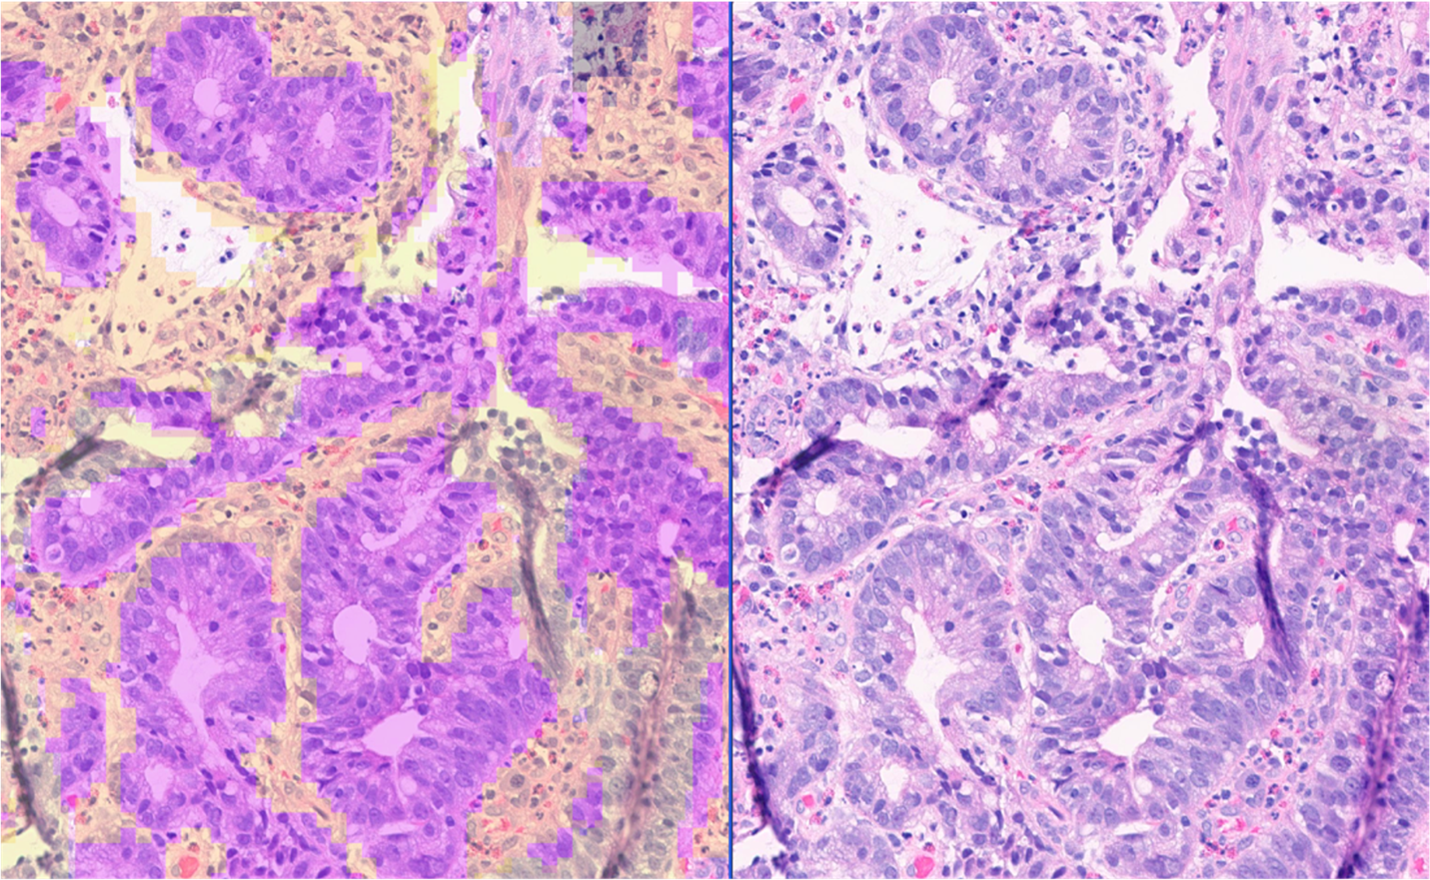 Caption: TumorDetect detects regions of artifact (yellow overlays) invasive gastric adenocarcinoma (purple overlays) as well as tumor-associated stroma (orange overlays).